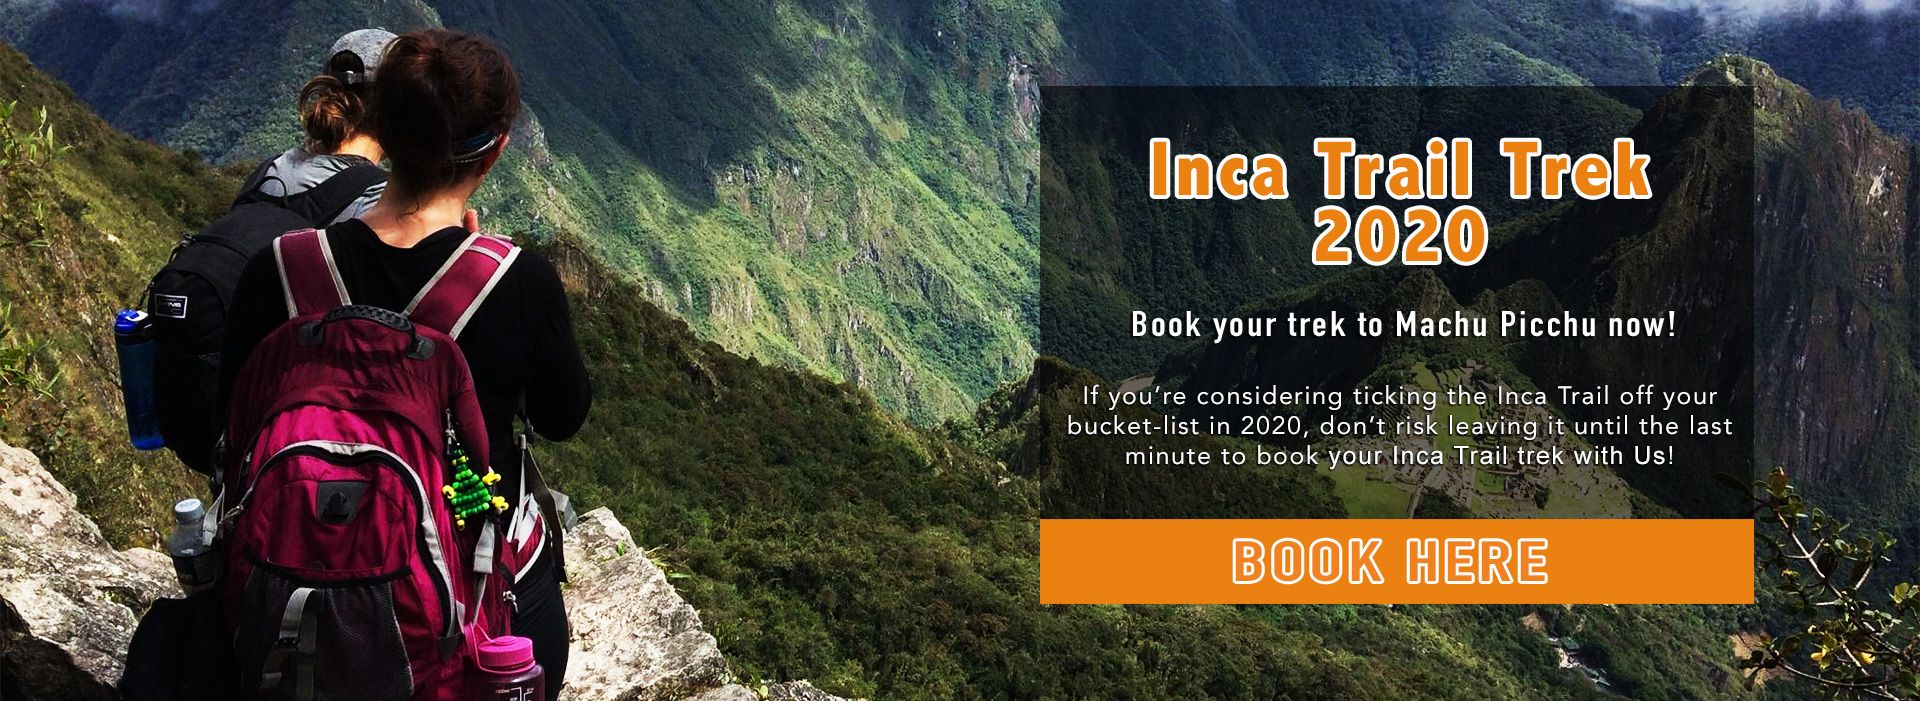 Inca trail trek 2020